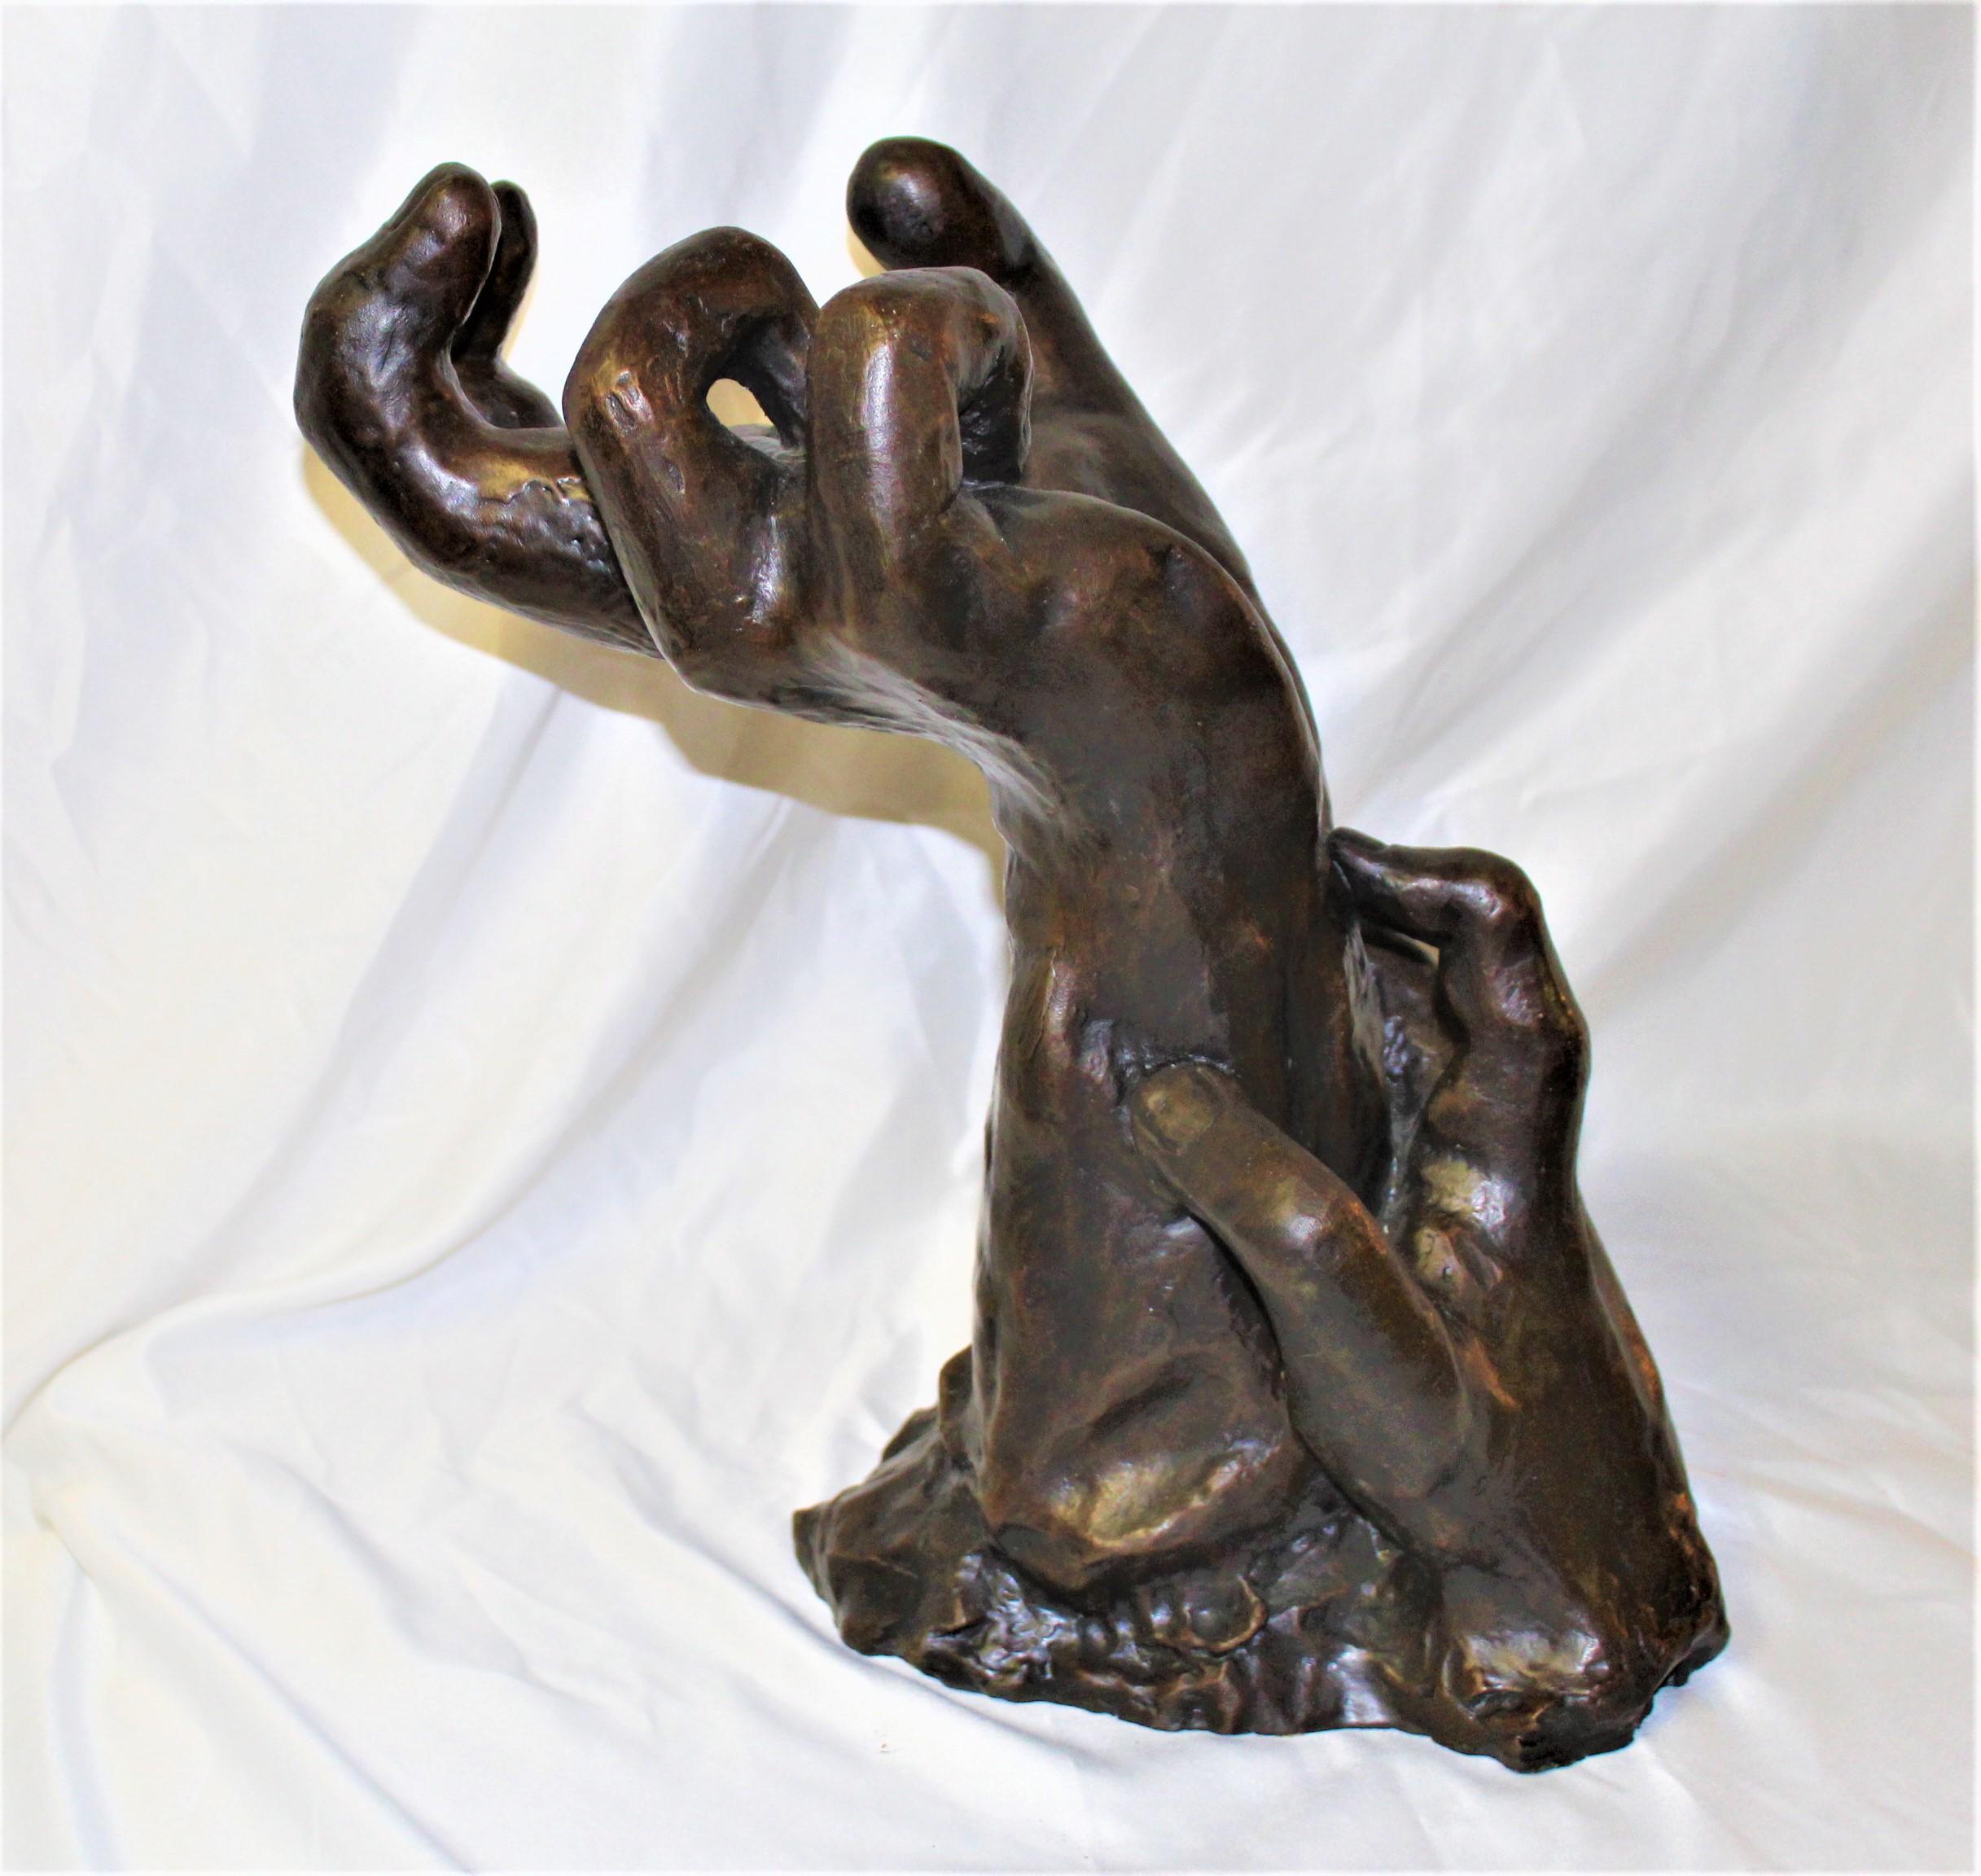 North American Art Nouveau Sculpture of Hands Bronze Casting after Rodin For Sale